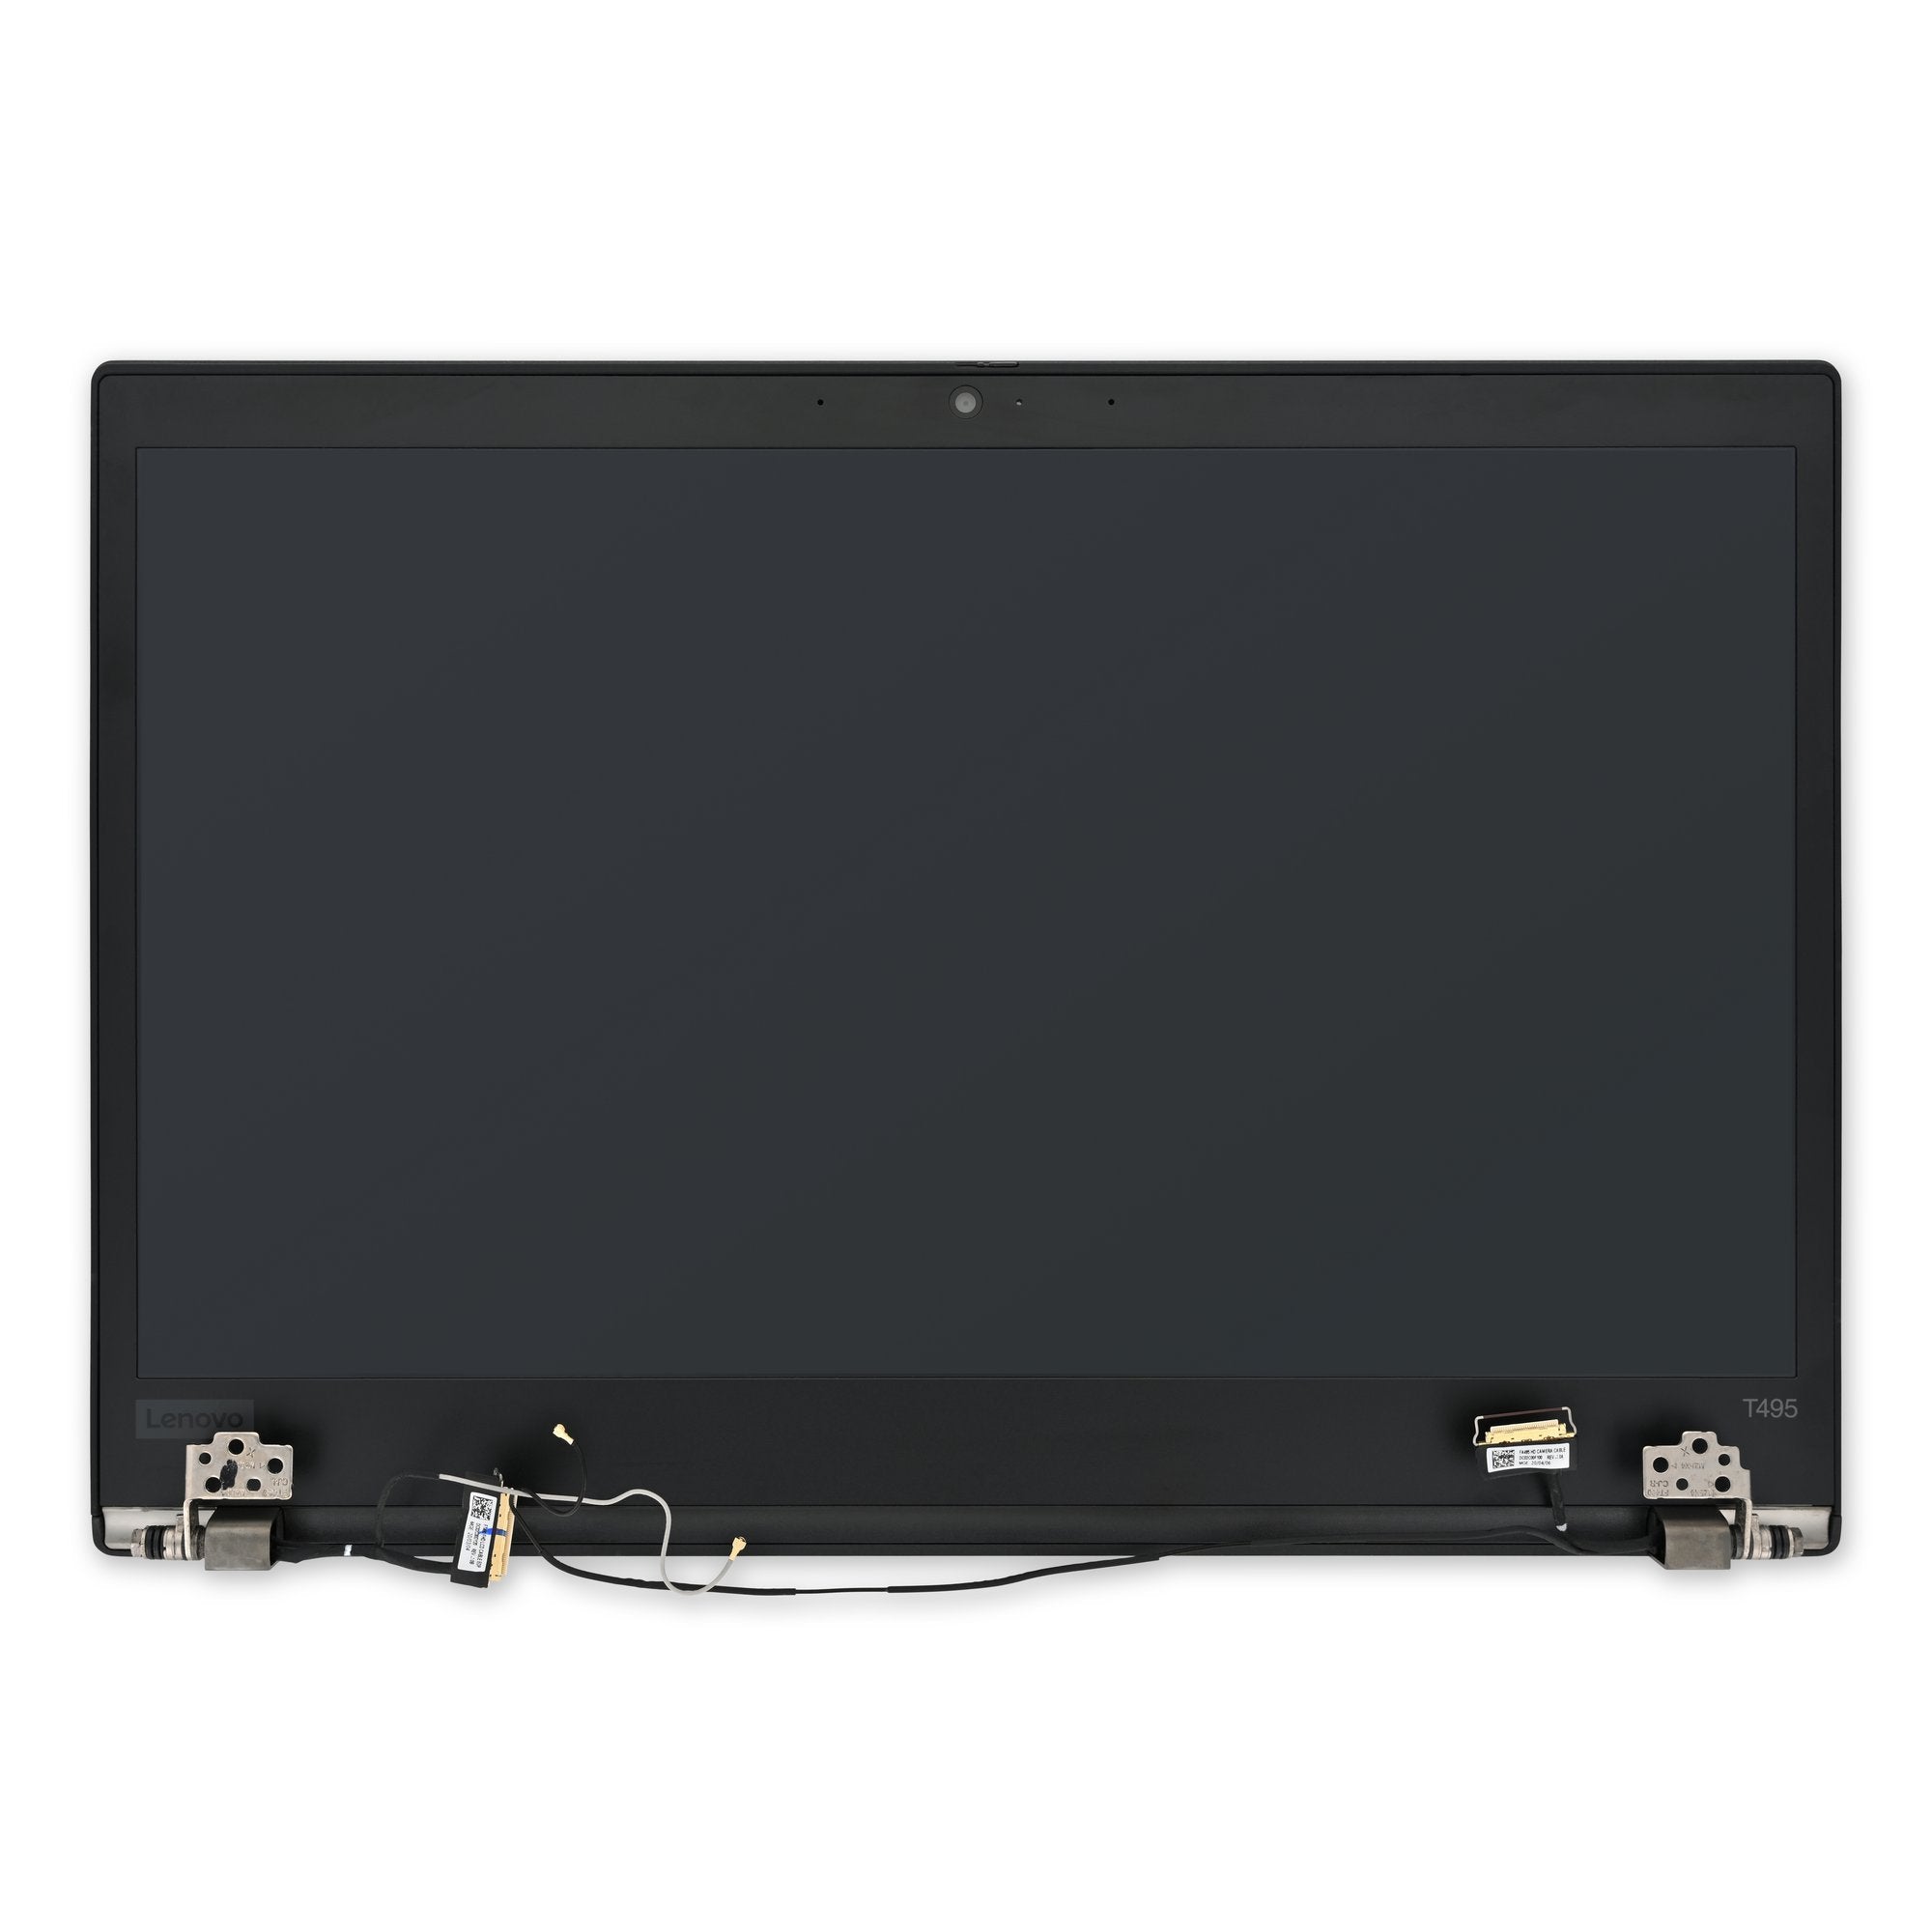 Lenovo ThinkPad T495 Display Assembly Used, A-Stock